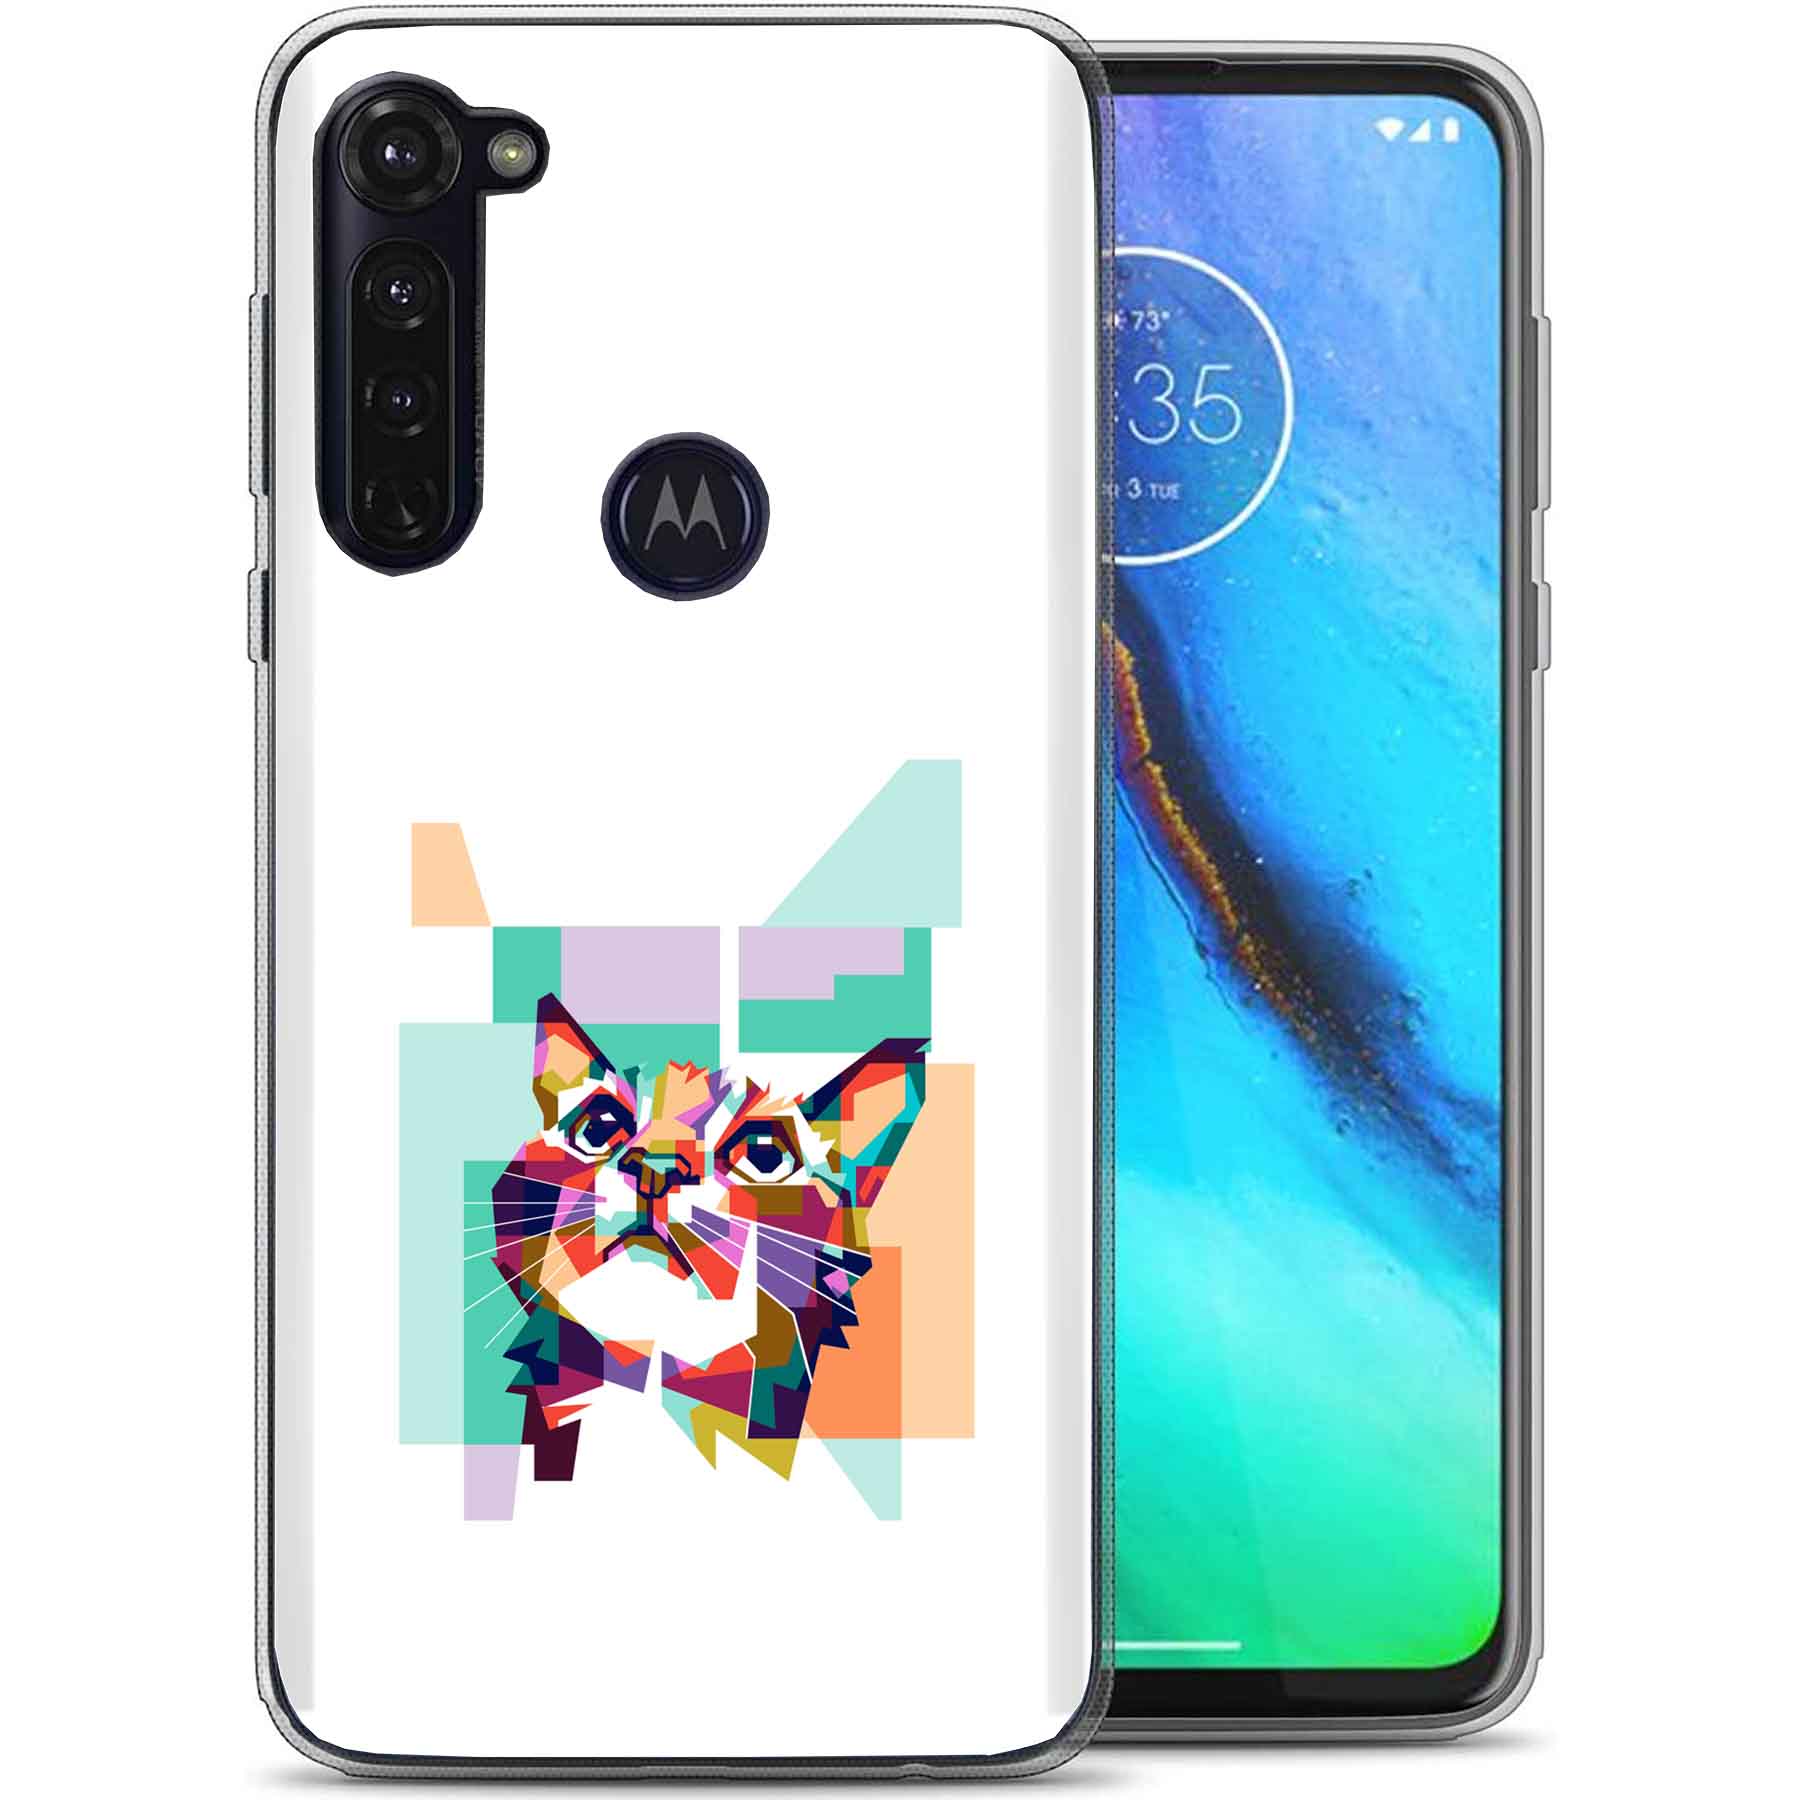 TalkingCase Slim TPU Phone Case Compatible for Motorola Moto G Stylus 2020, 3D Cat Print, Thin, Flexible, Soft Touch, USA